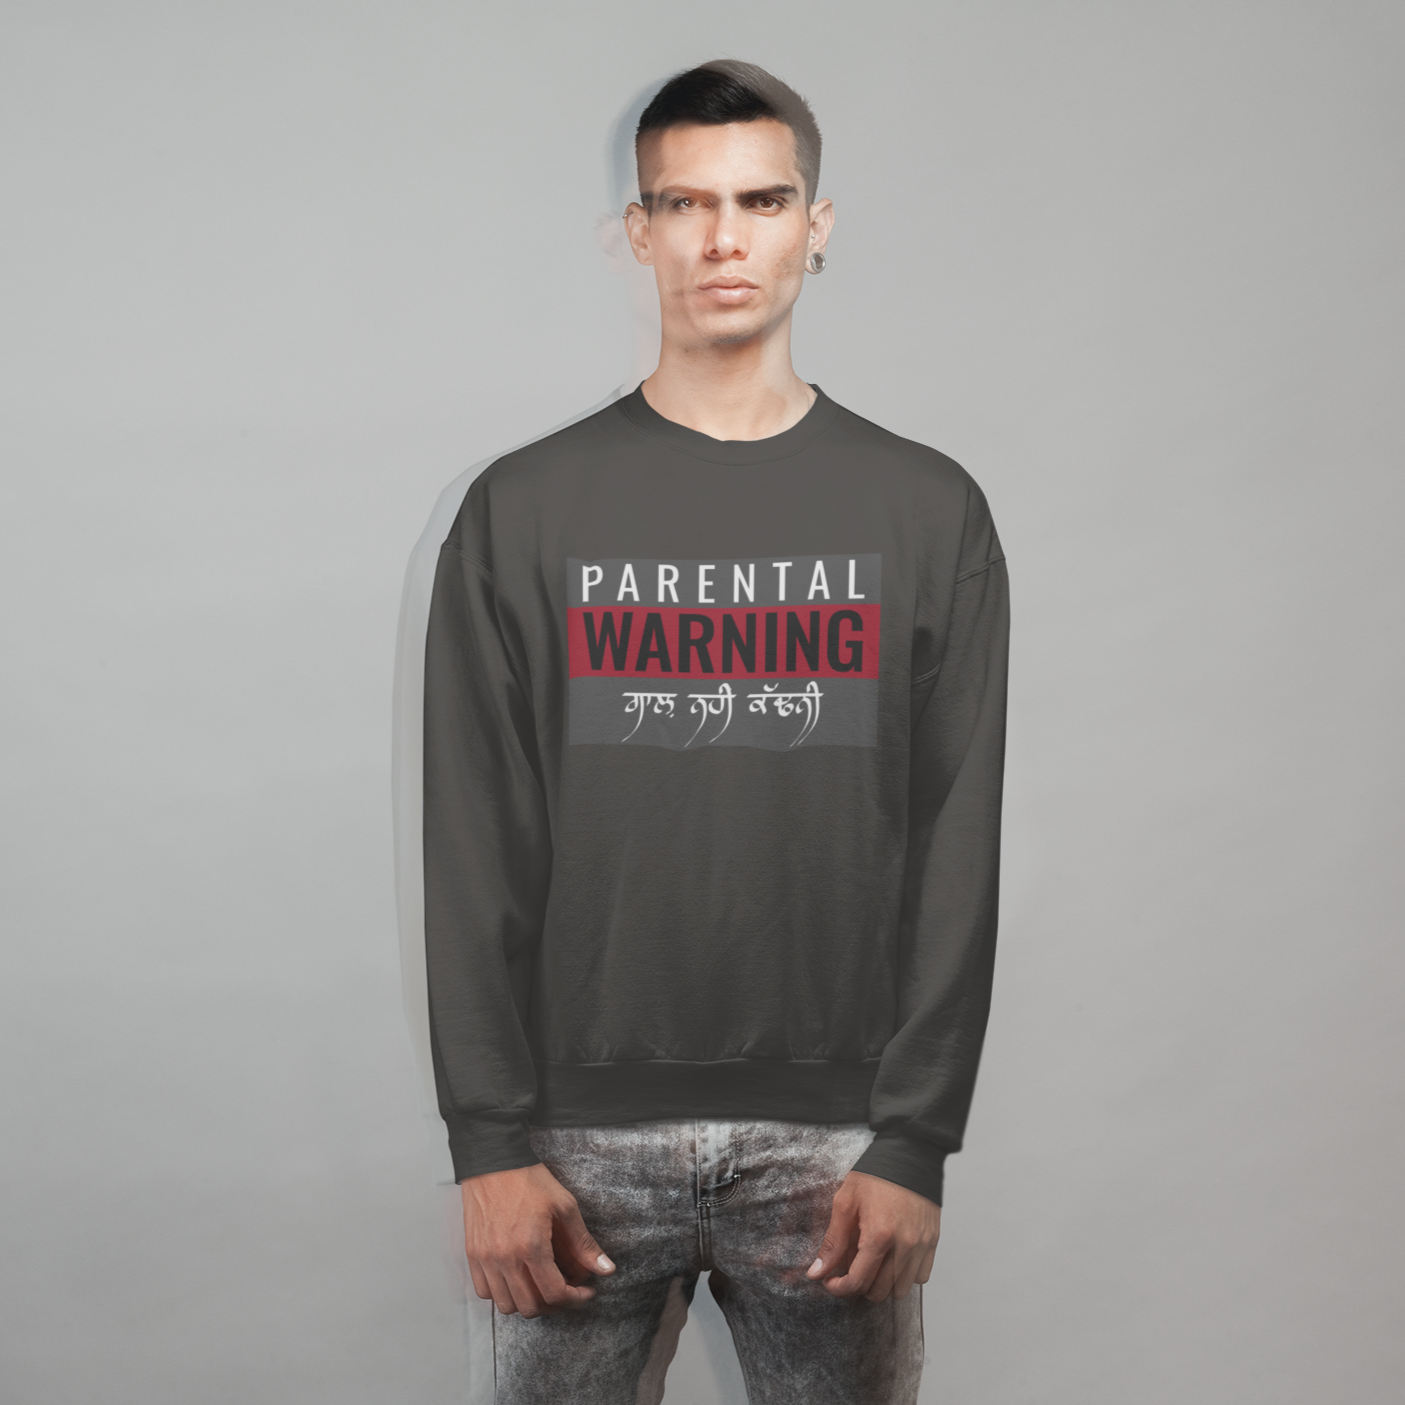 parental warning desi sweatshirt the desi dna gaal in kadni